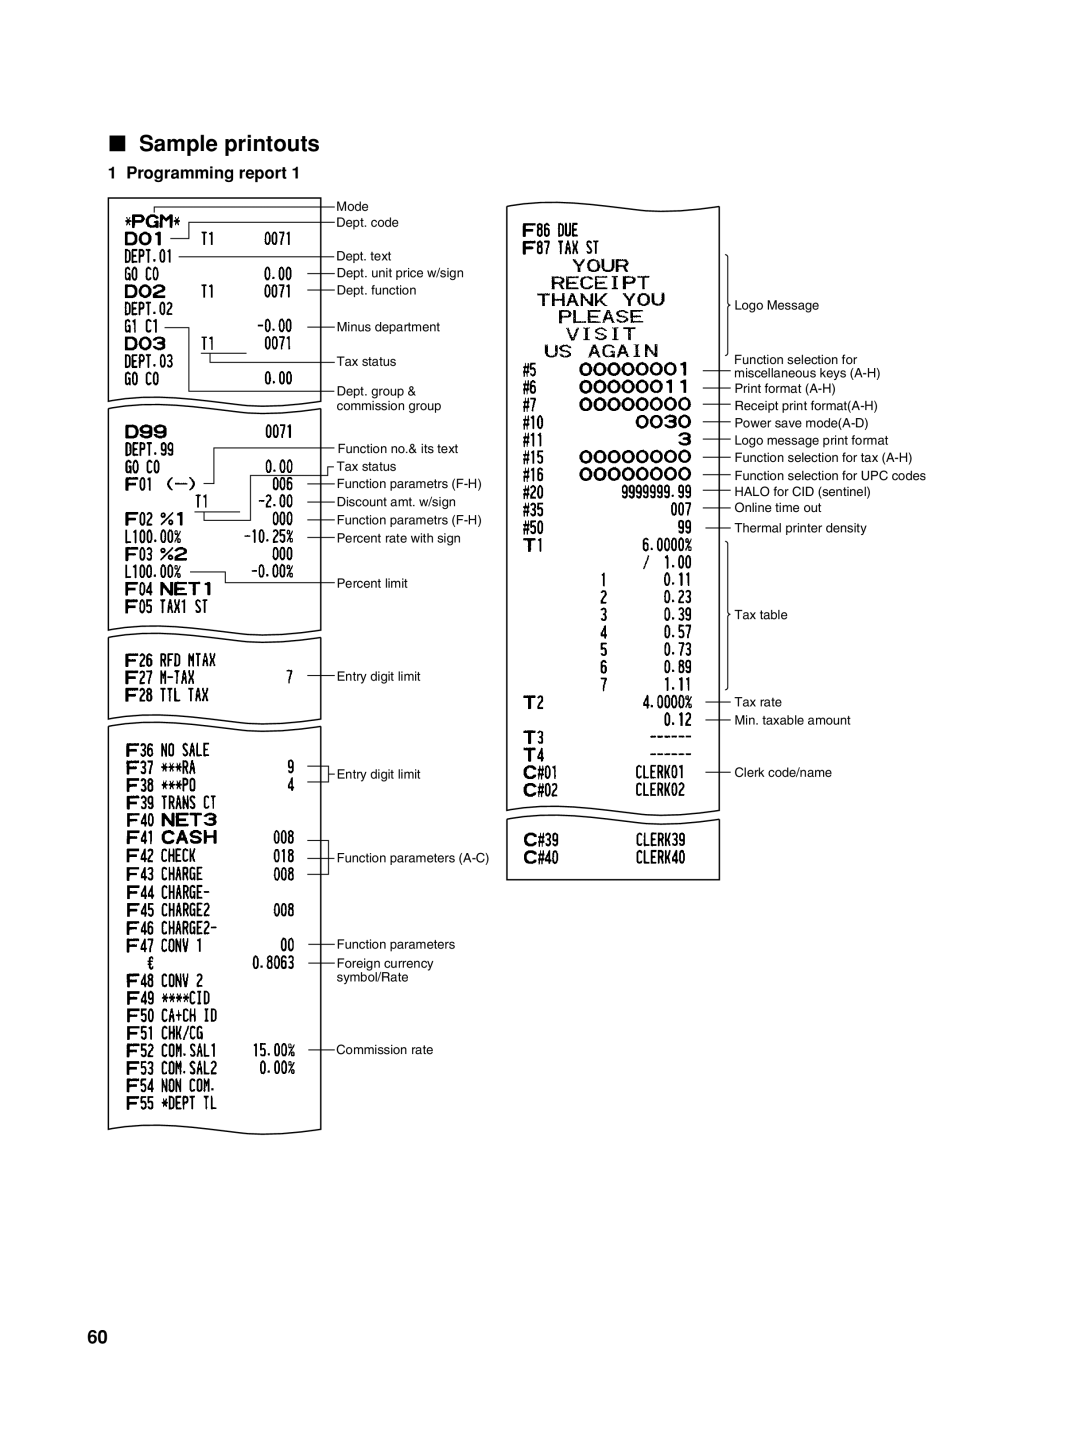 Sharp XE-A42S instruction manual Sample printouts, Programming report 